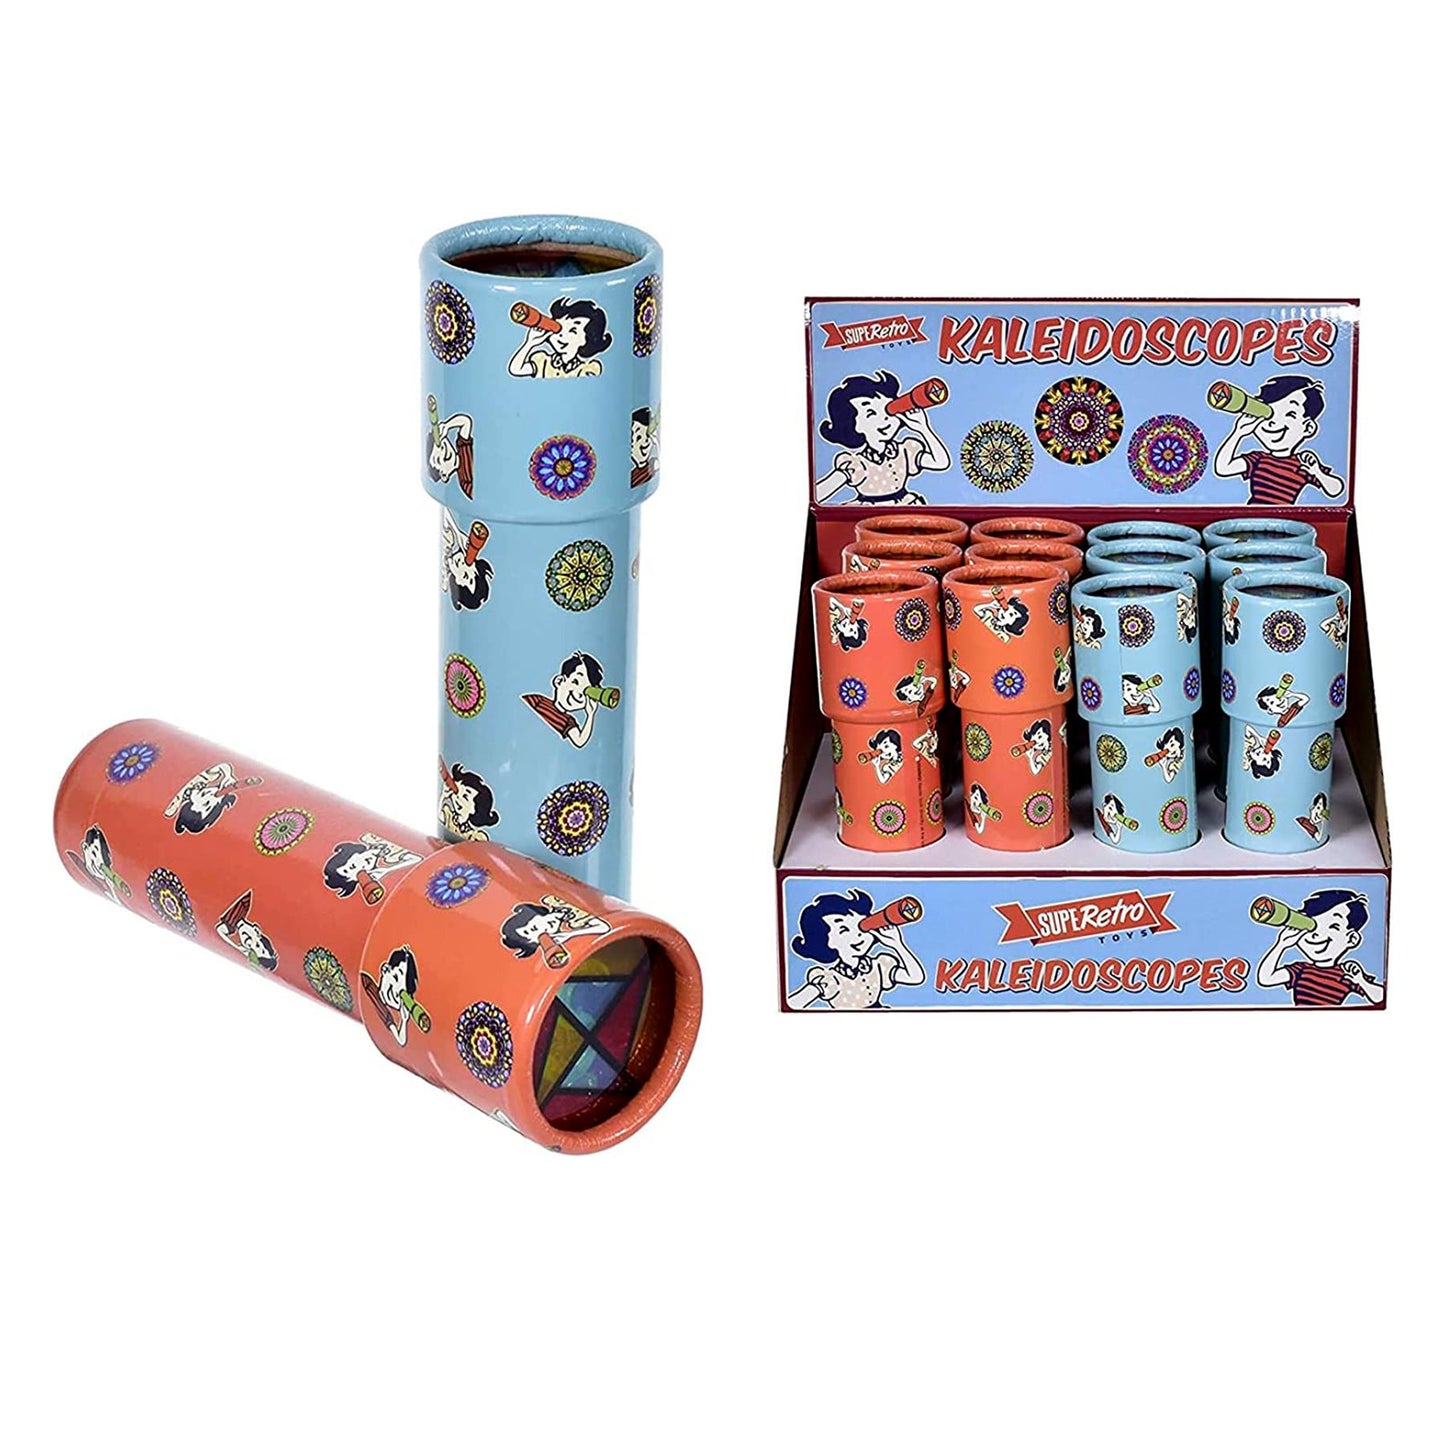 Kids Kaleidoscope Toy - Set of 12 by The Magic Toy Shop - UKBuyZone